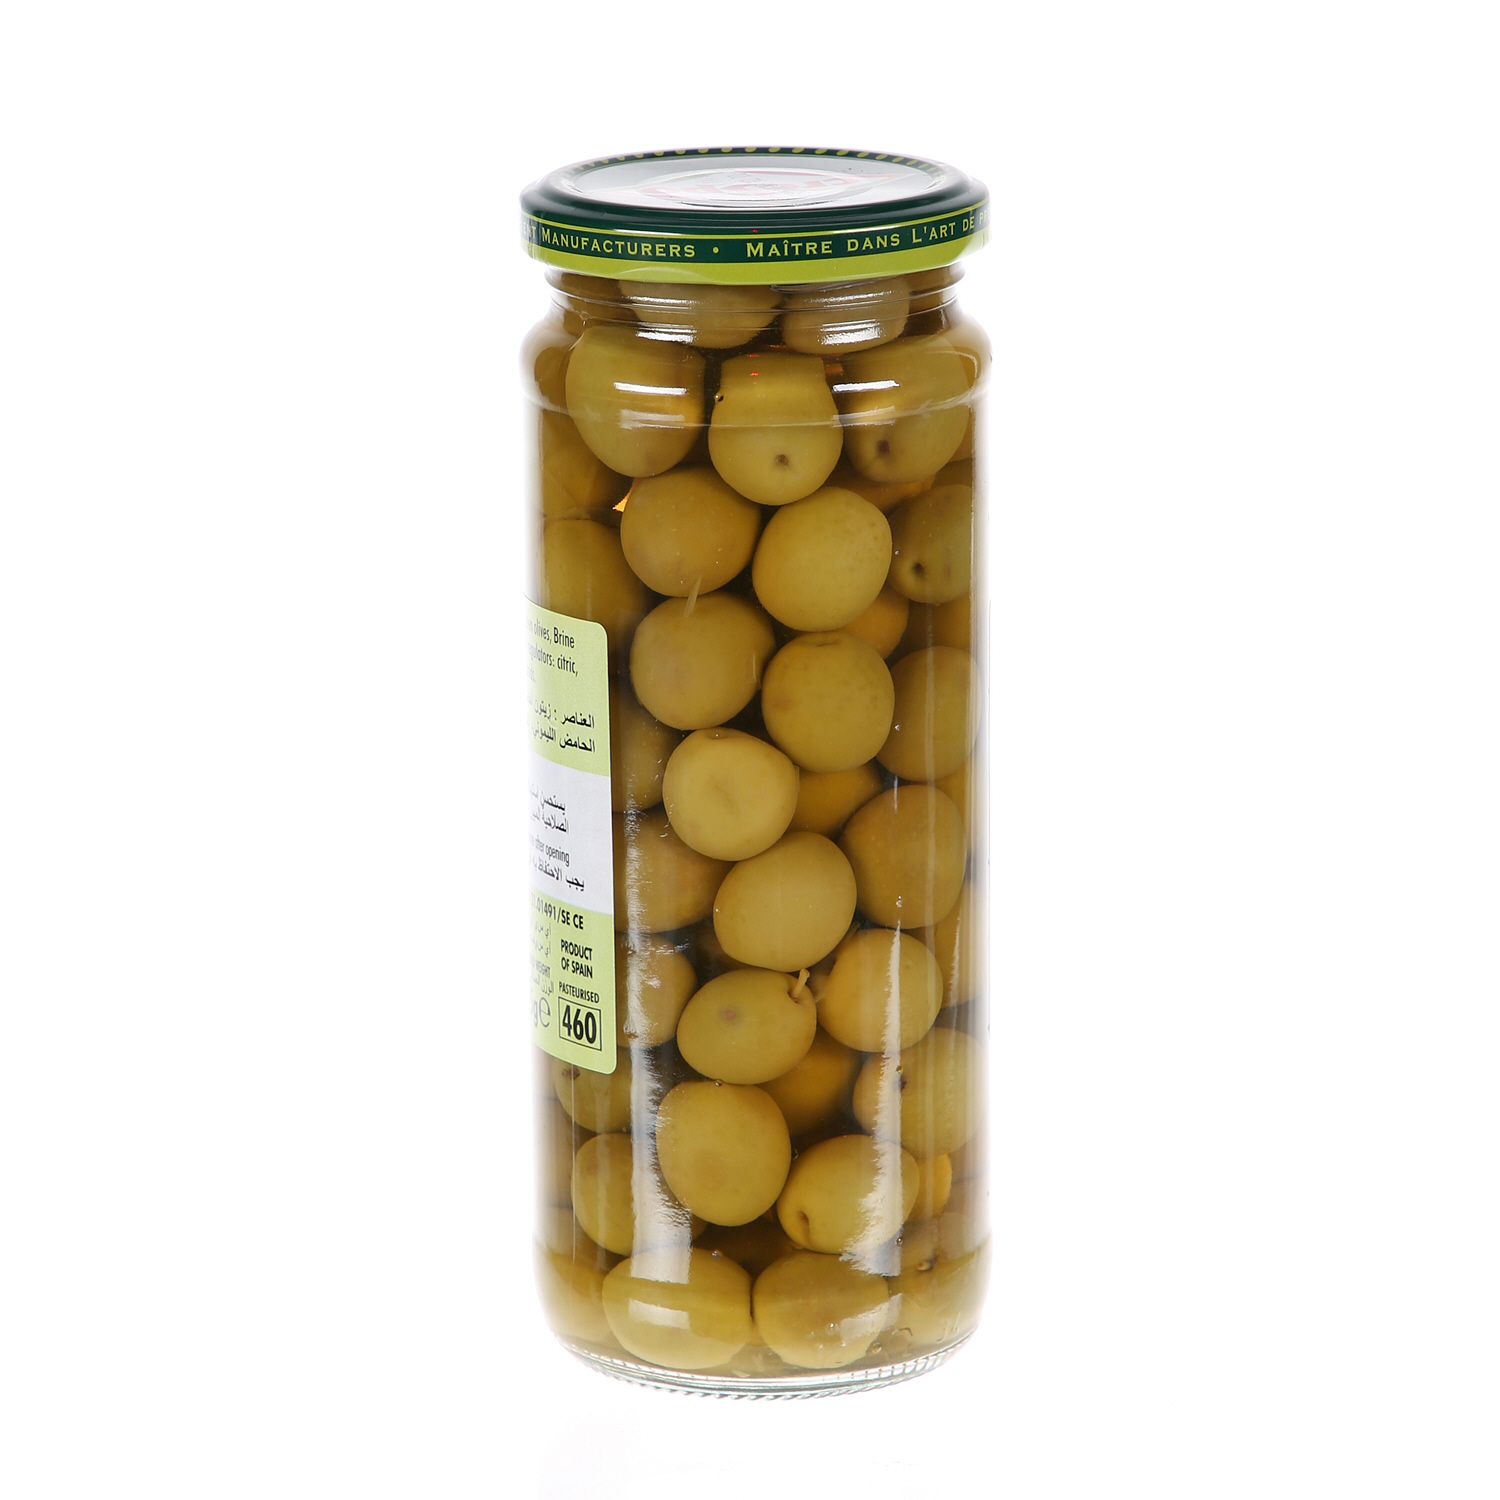 Crespo Whole Green Olives Jar 450 g